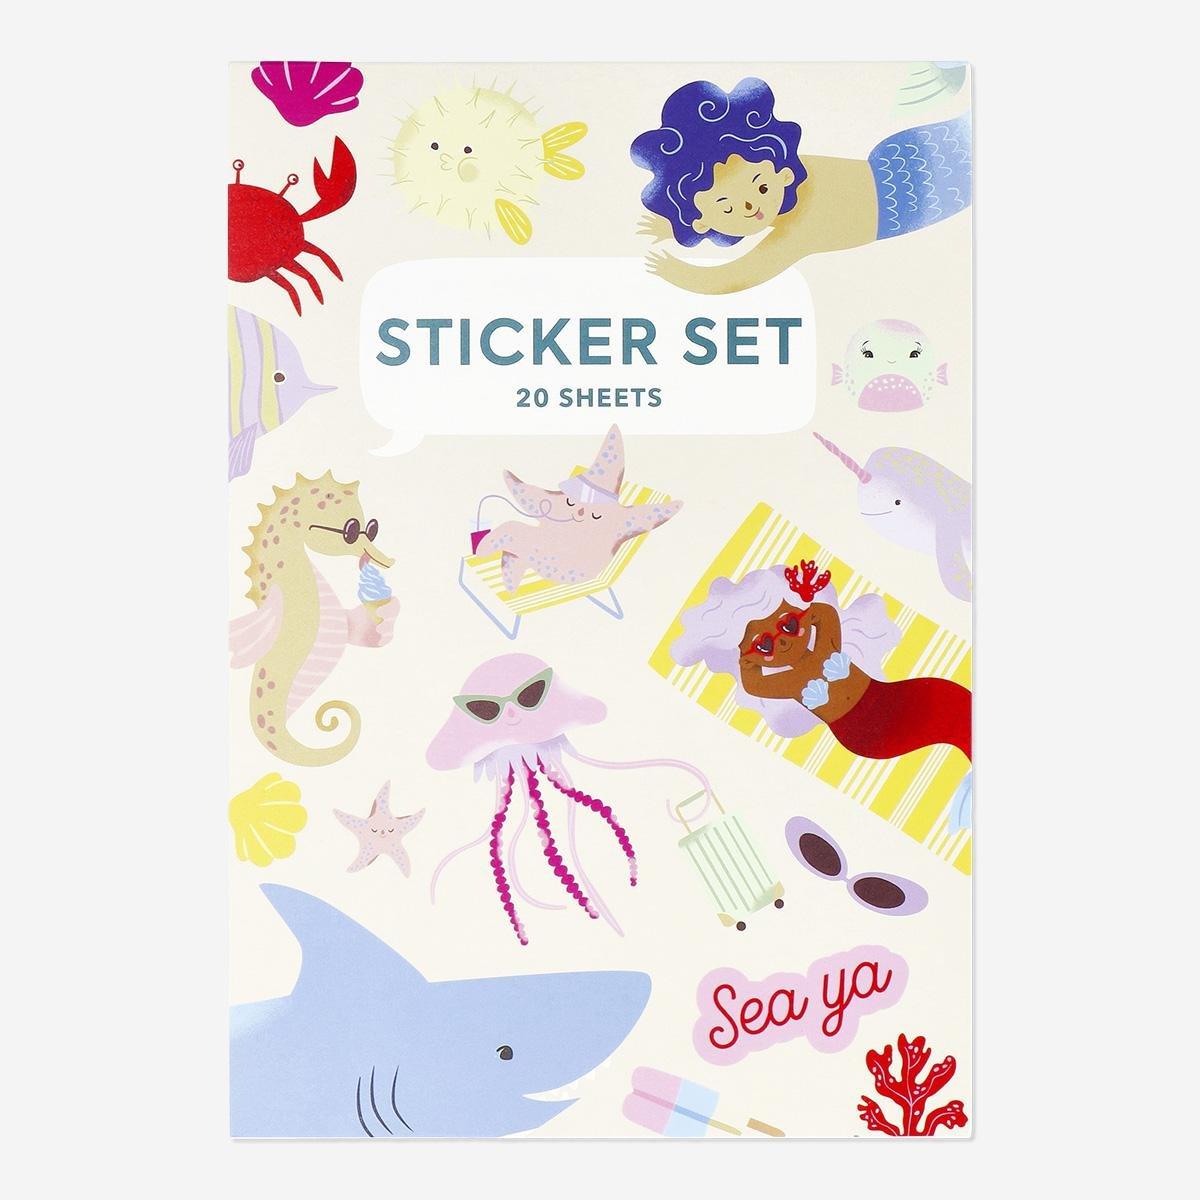 Multicolour stickers. 359 pcs